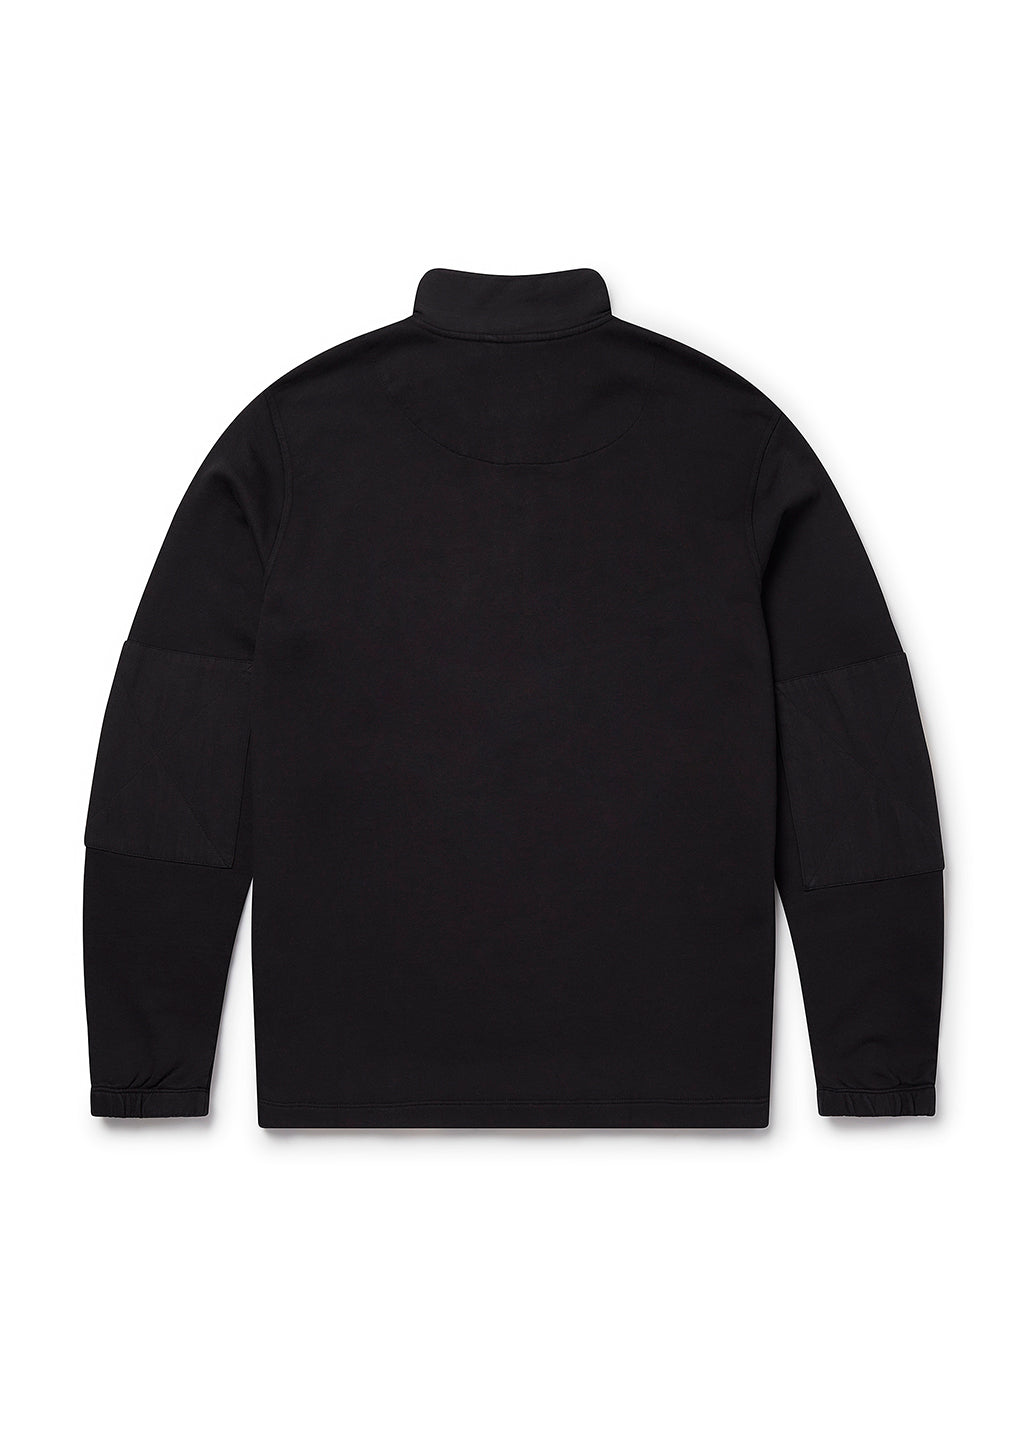 Sweatshirts – albam Clothing